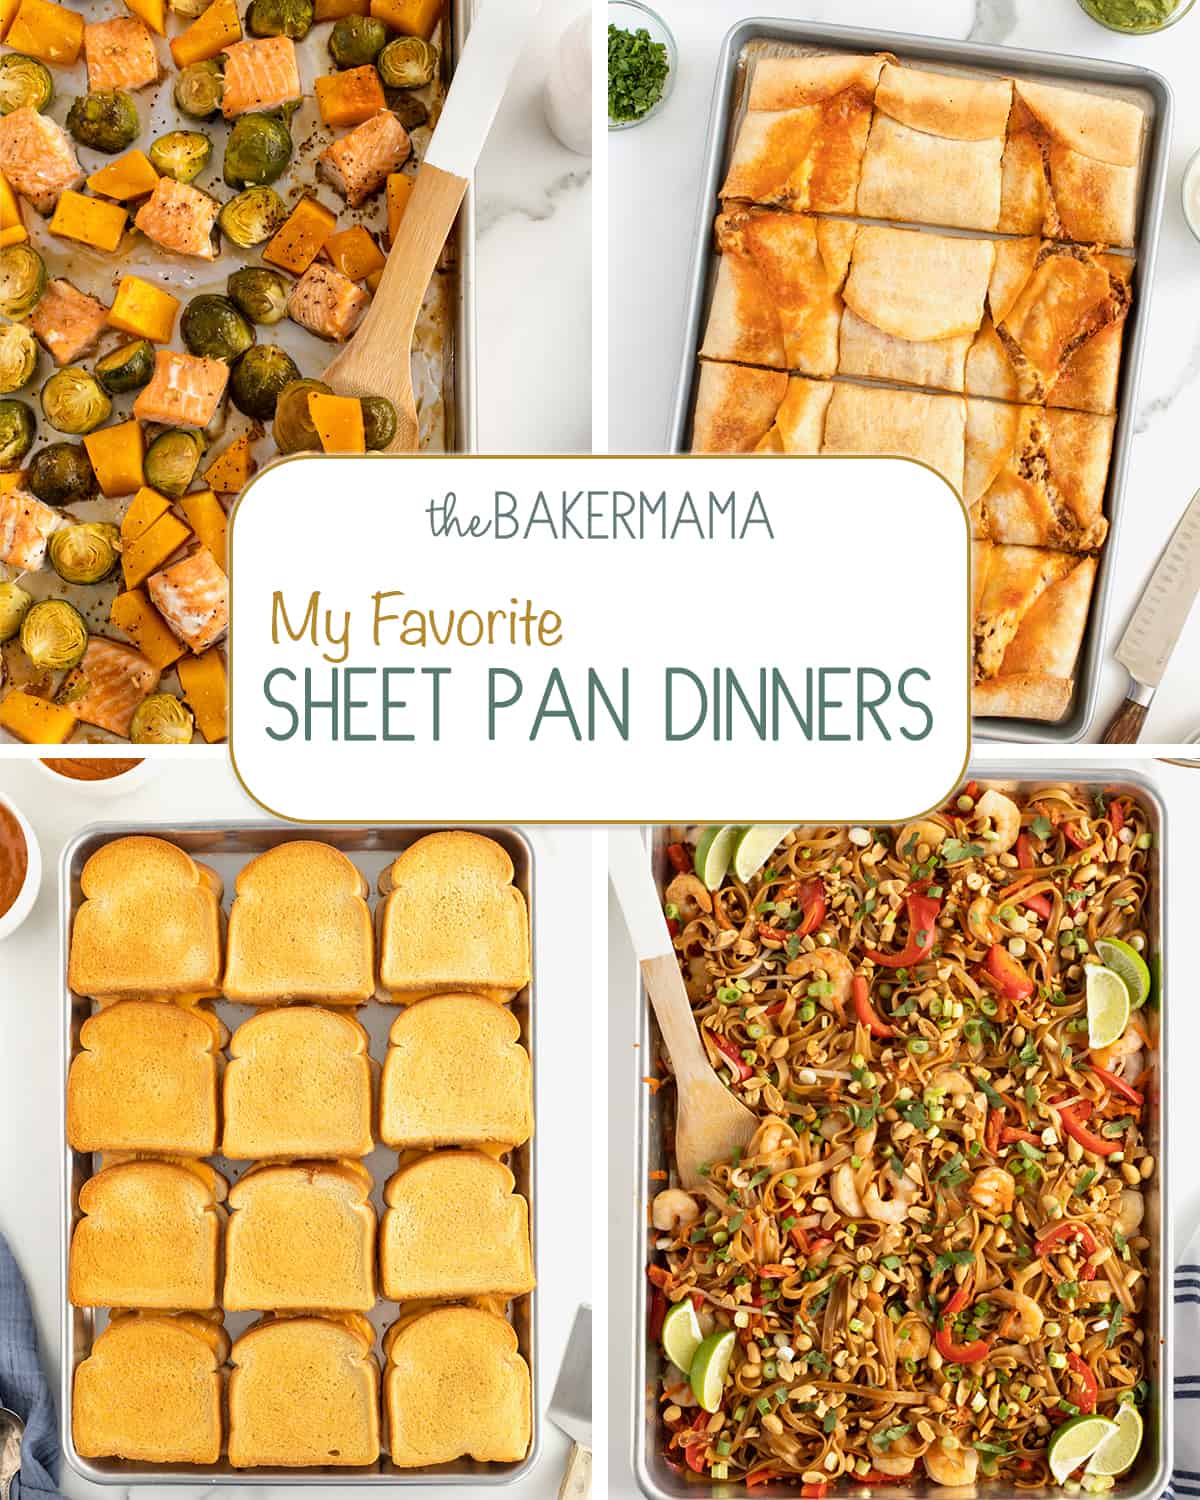 My Favorite Sheet Pan Dinners by The BakerMama